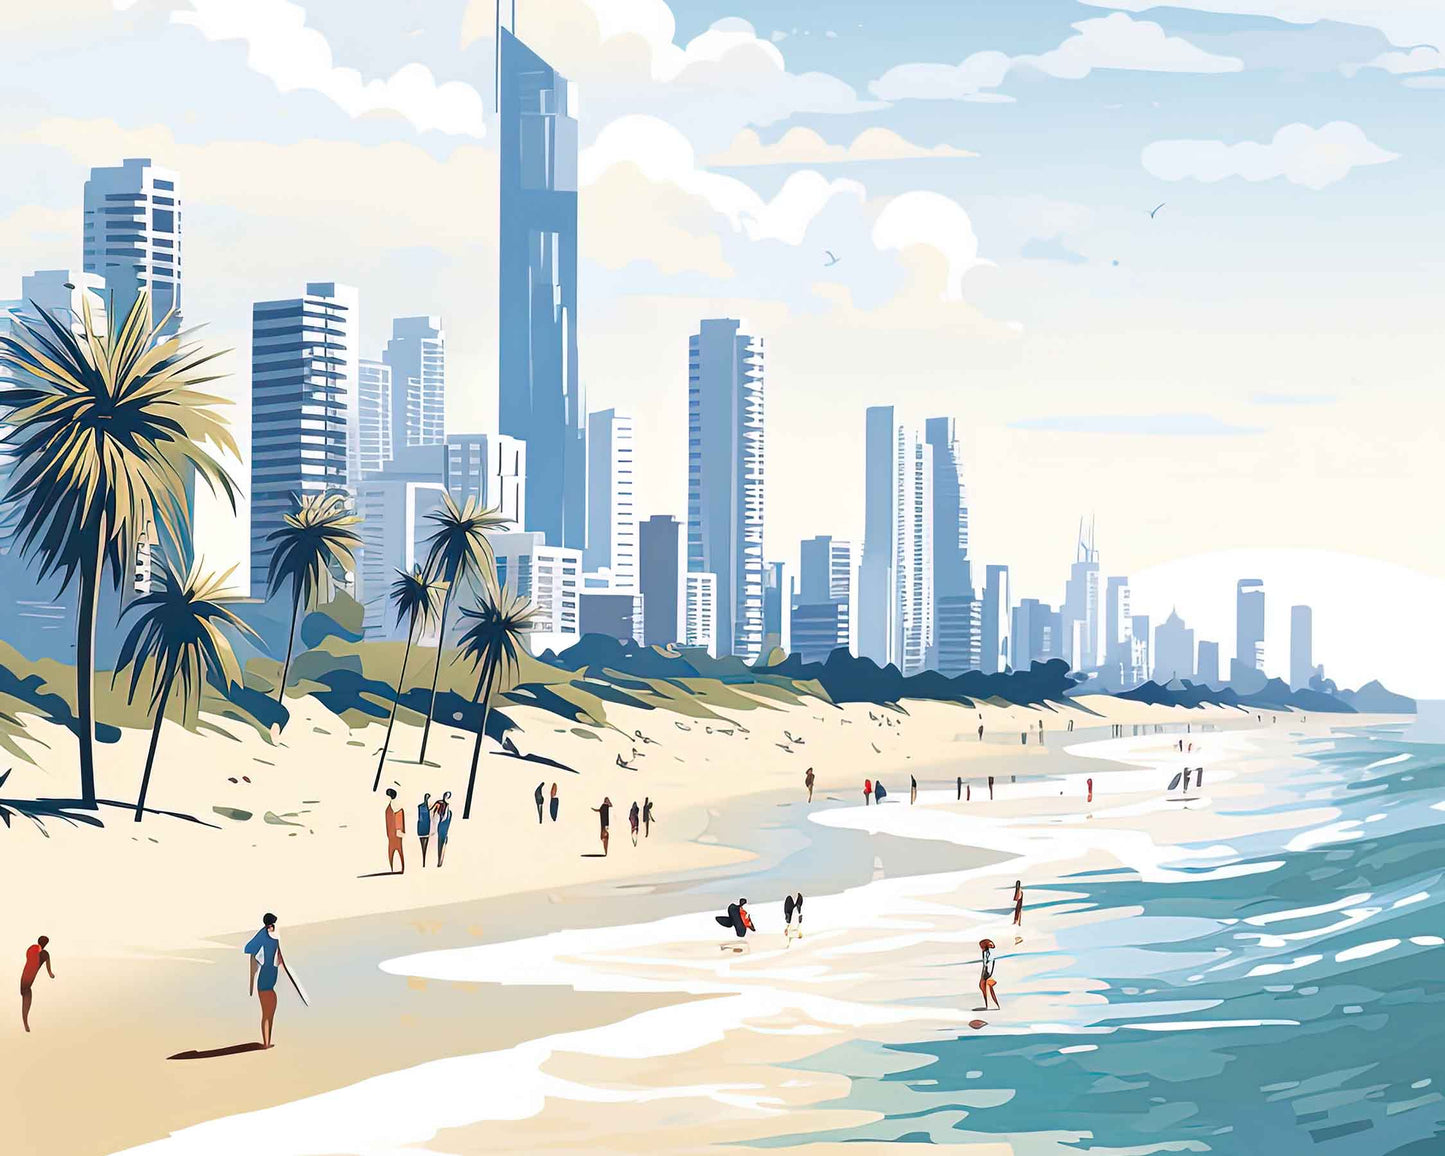 Framed Image of Gold Coast Australia Travel Poster Prints Illustration Wall Art